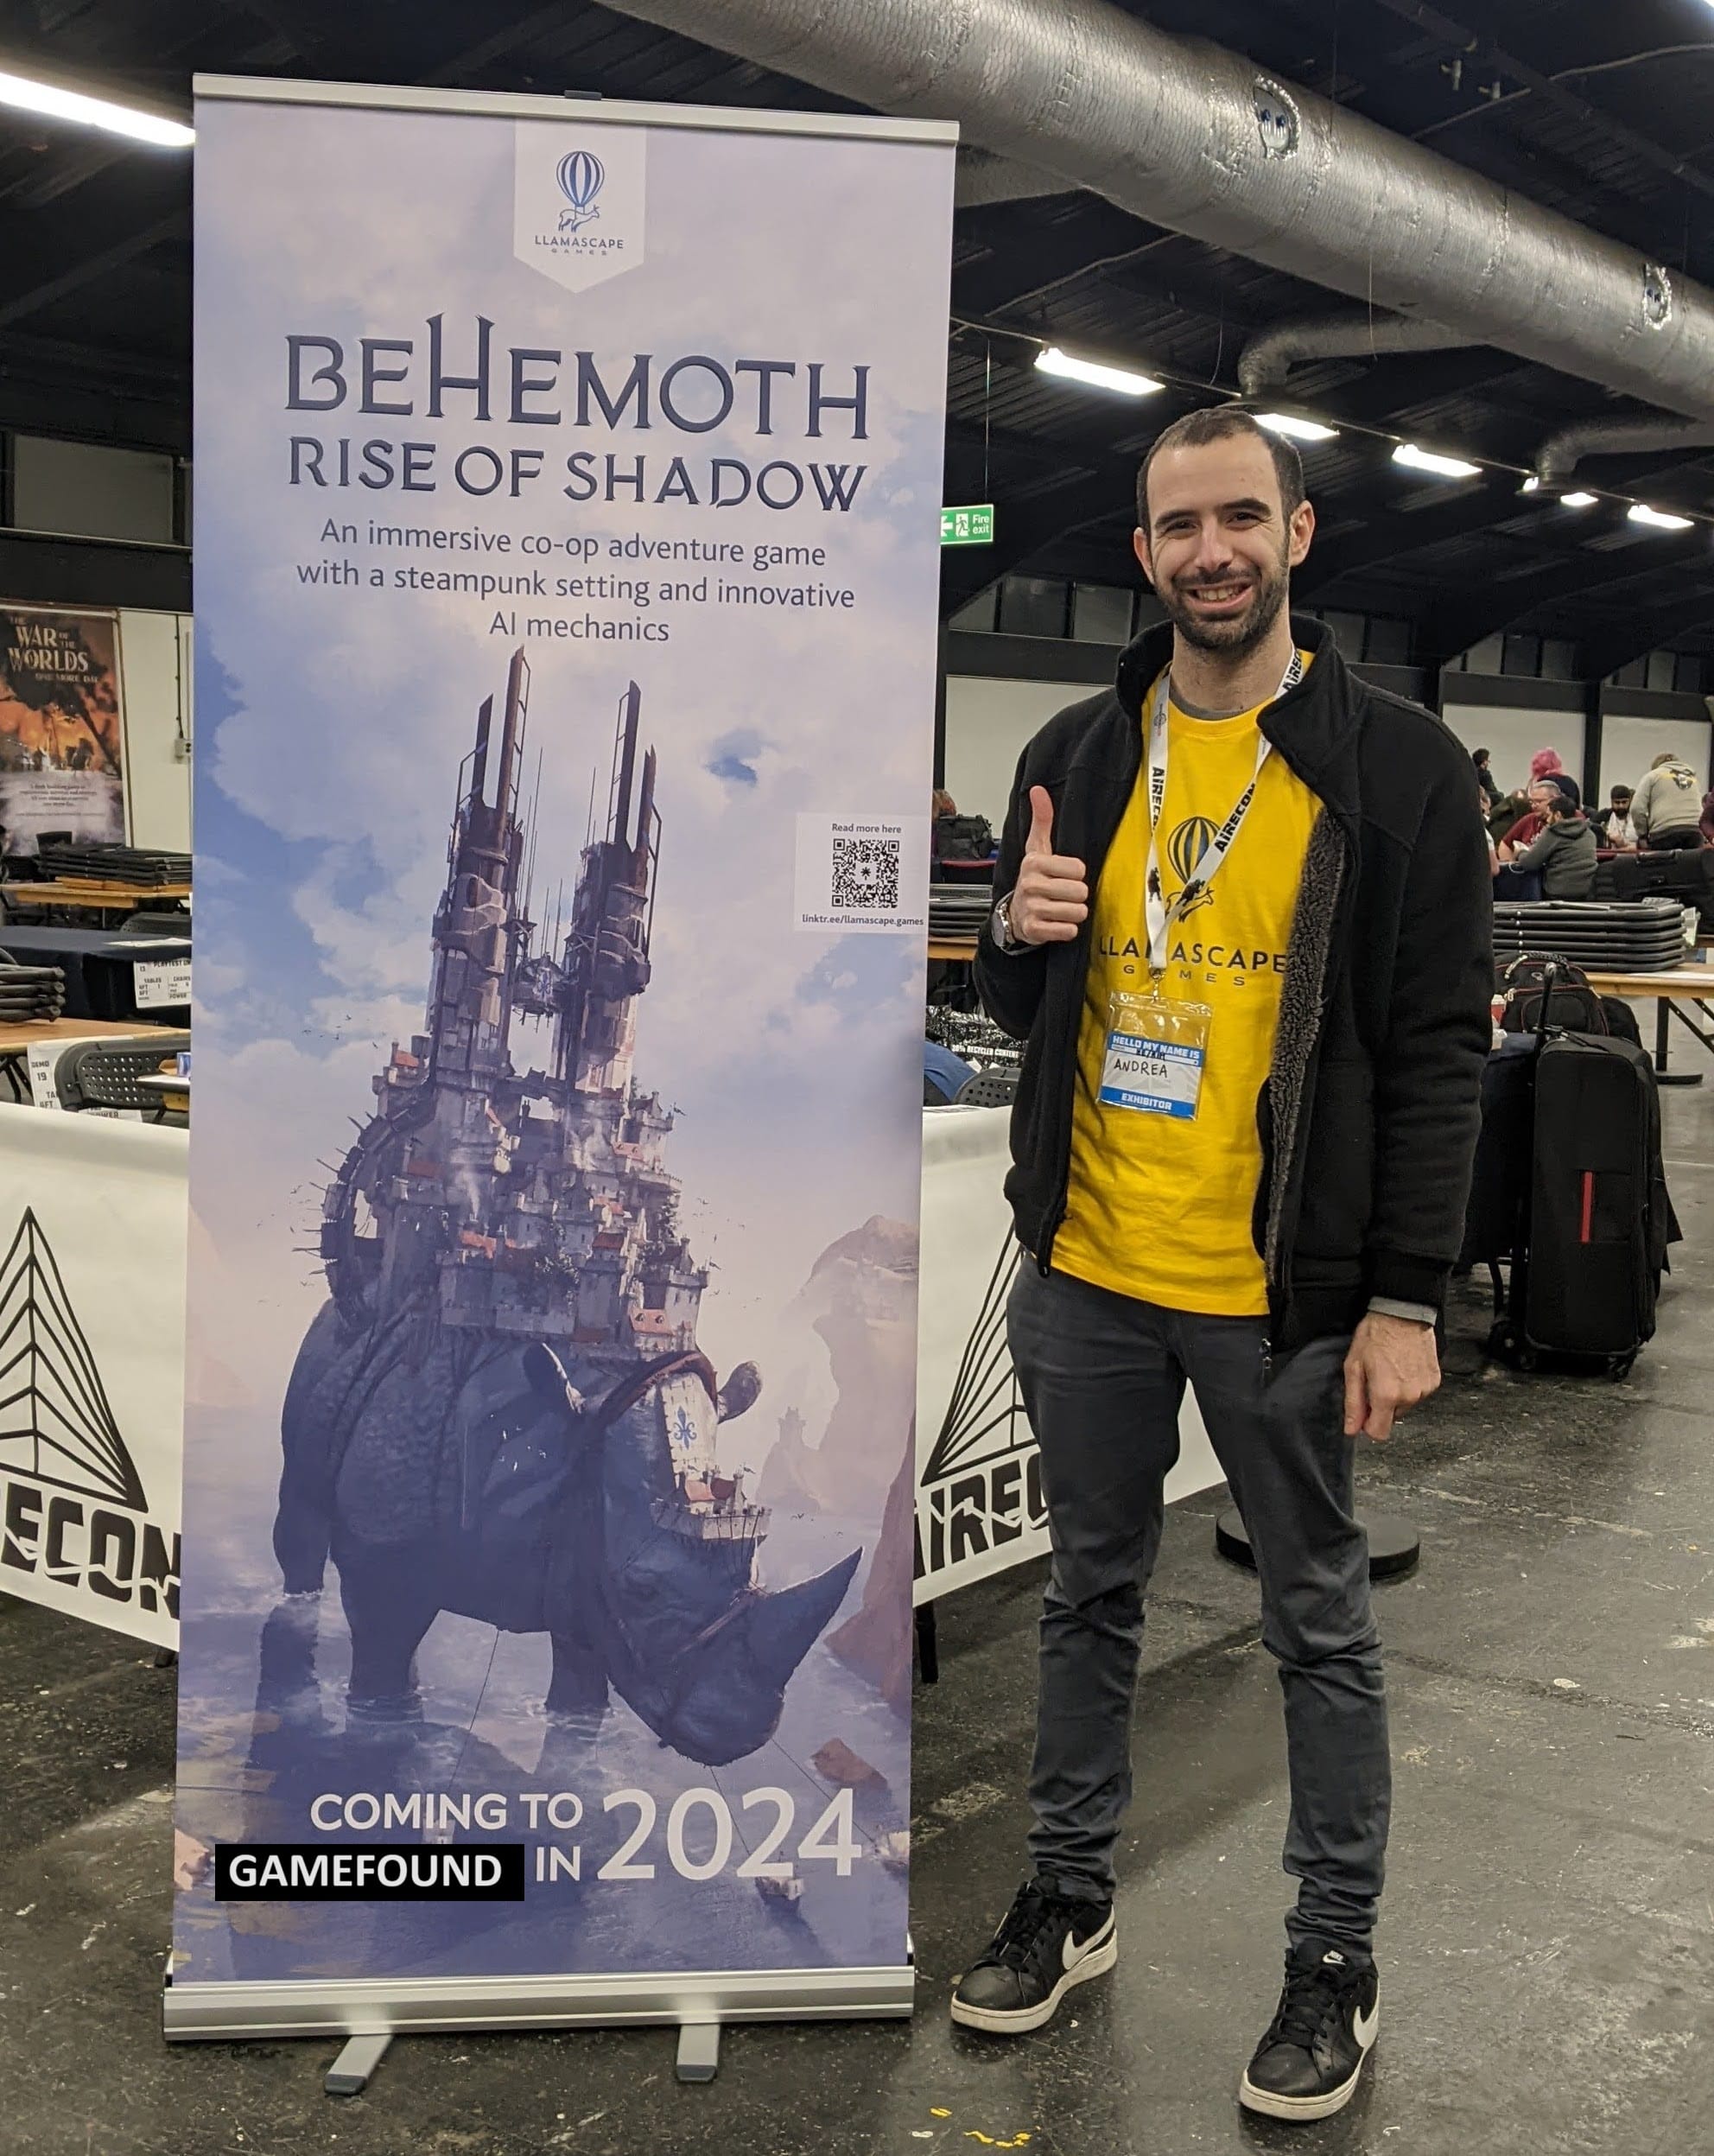 Behemoth: Rise of Shadow